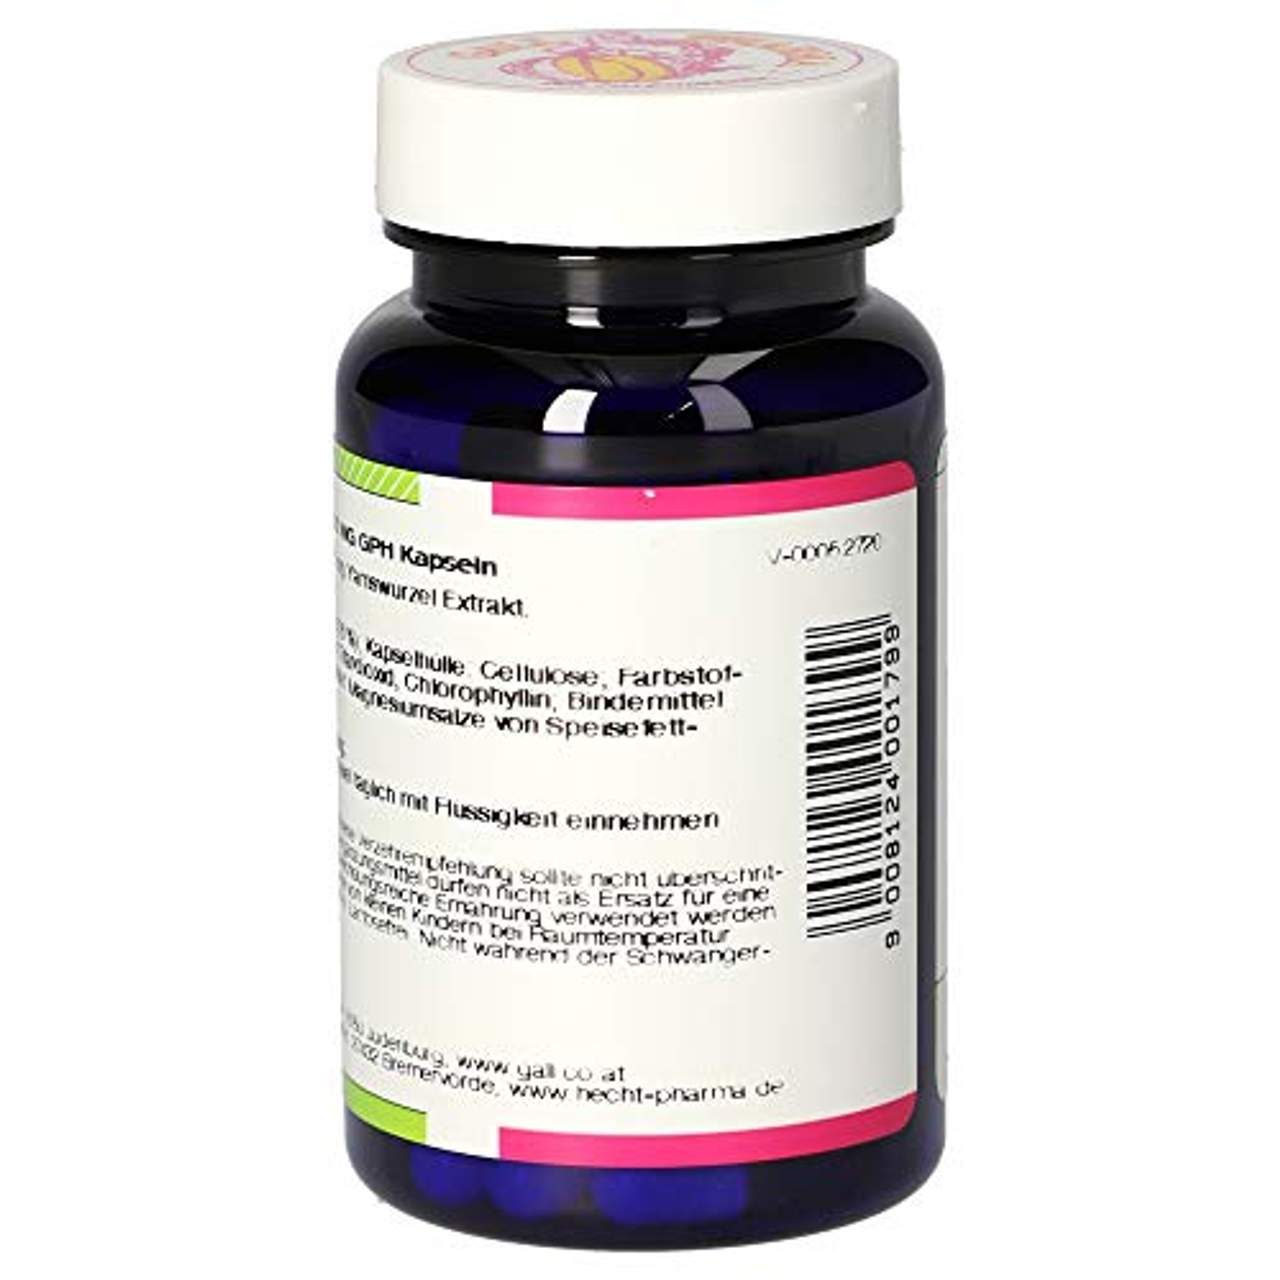 Gall Pharma Yamswurzel 500 mg GPH Kapseln